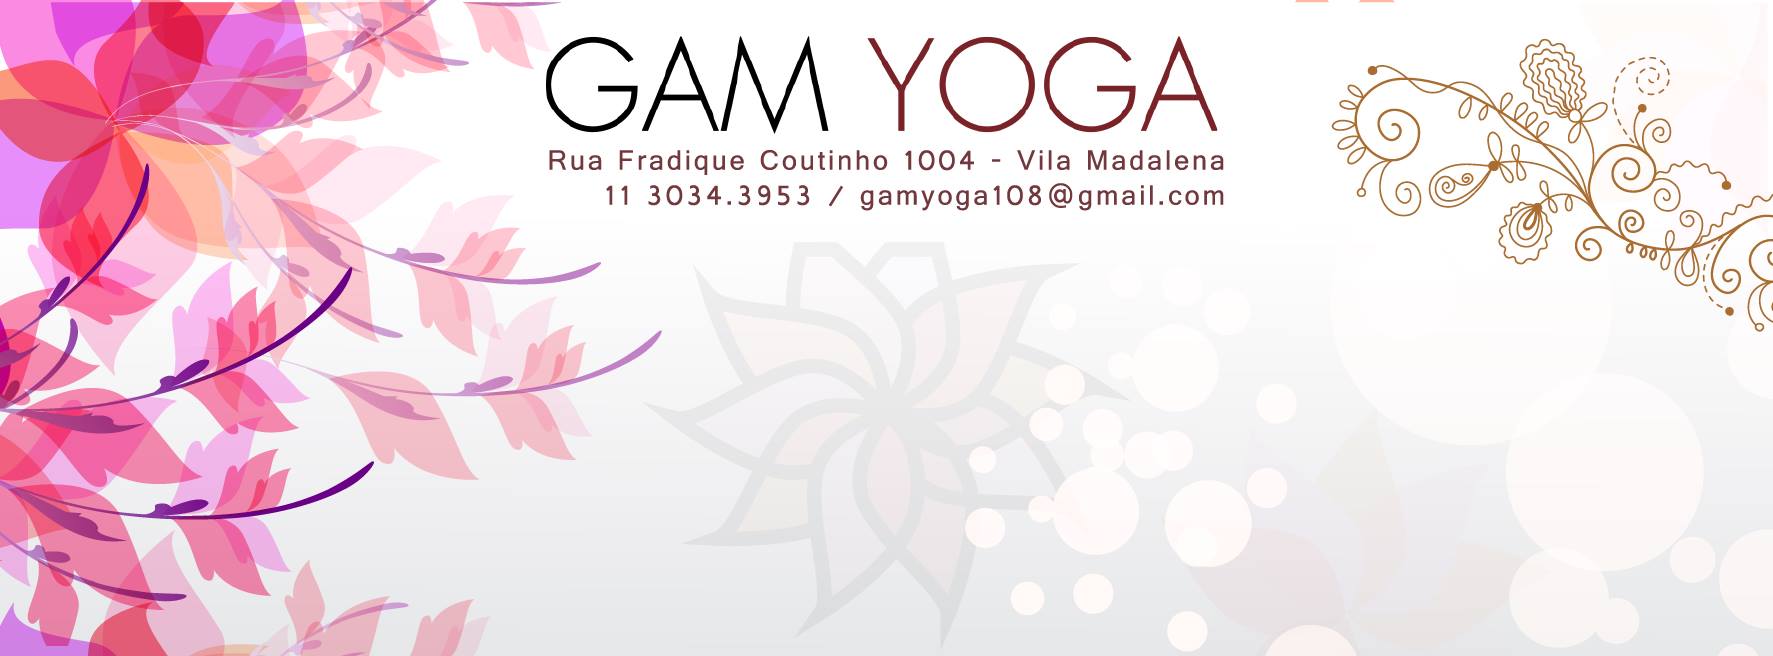 Gam Yoga Center Image